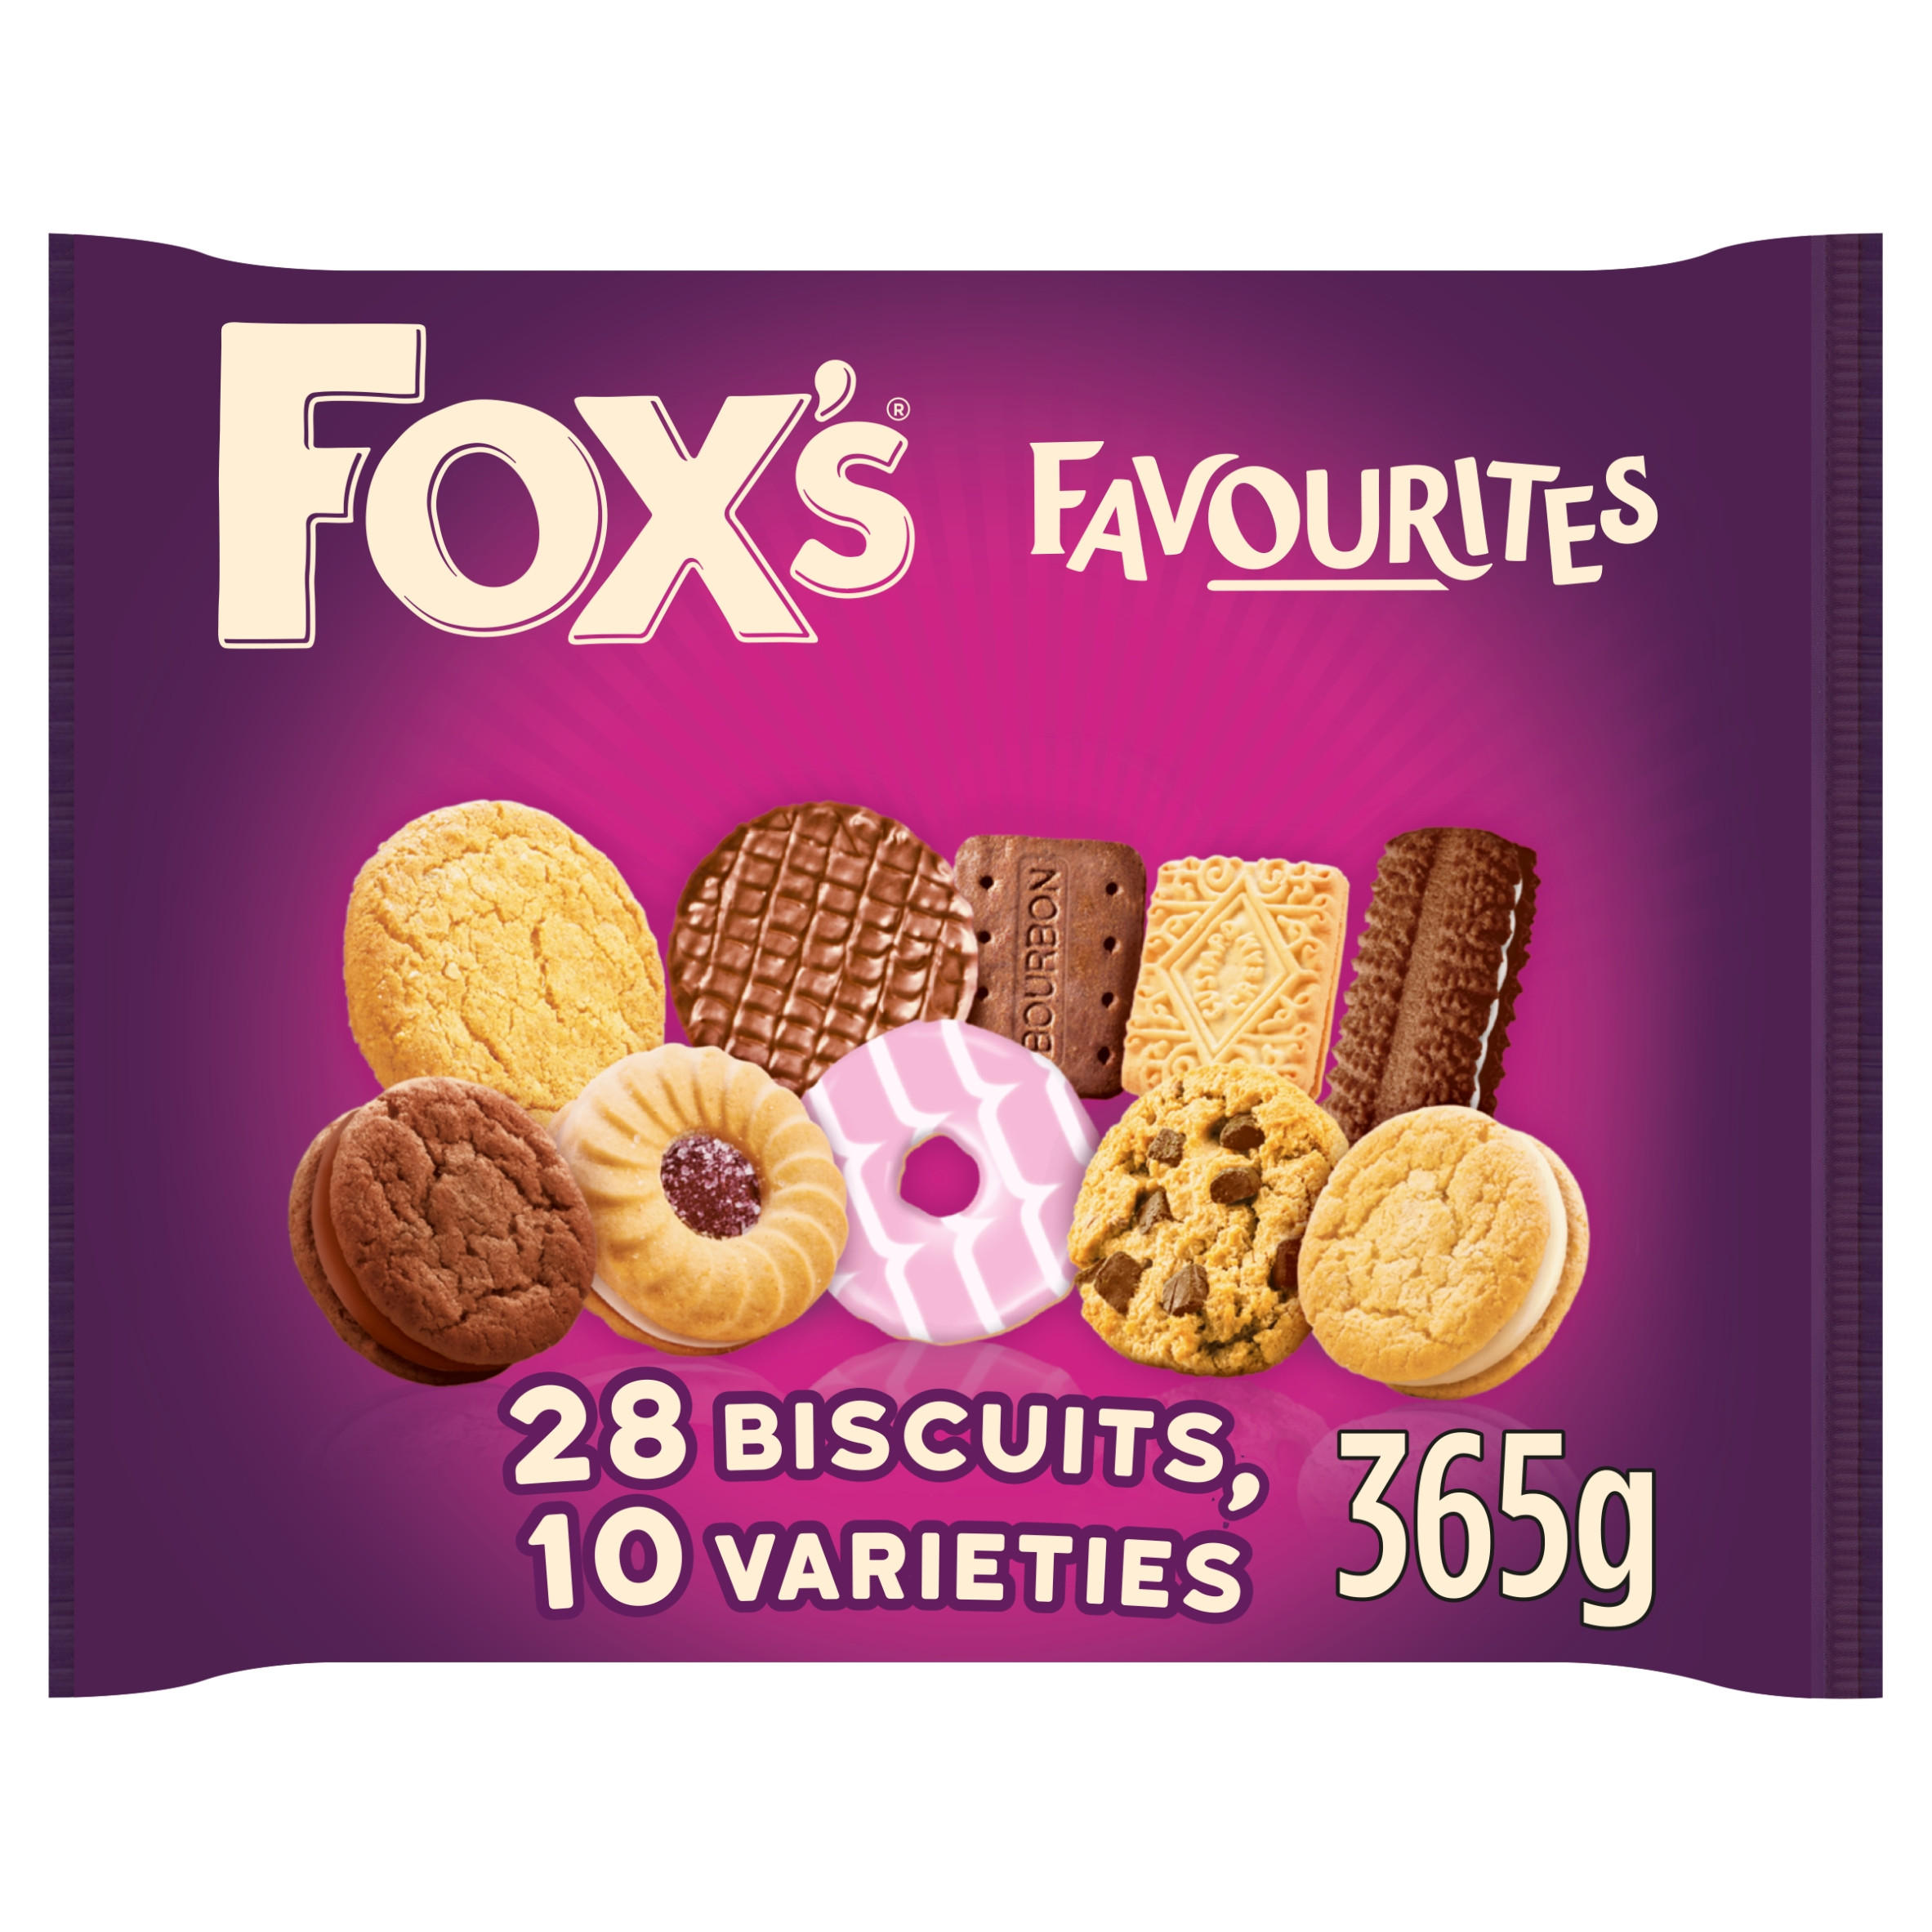 Fox's Favourites 28 Biscuits with 10 Varieties 365g